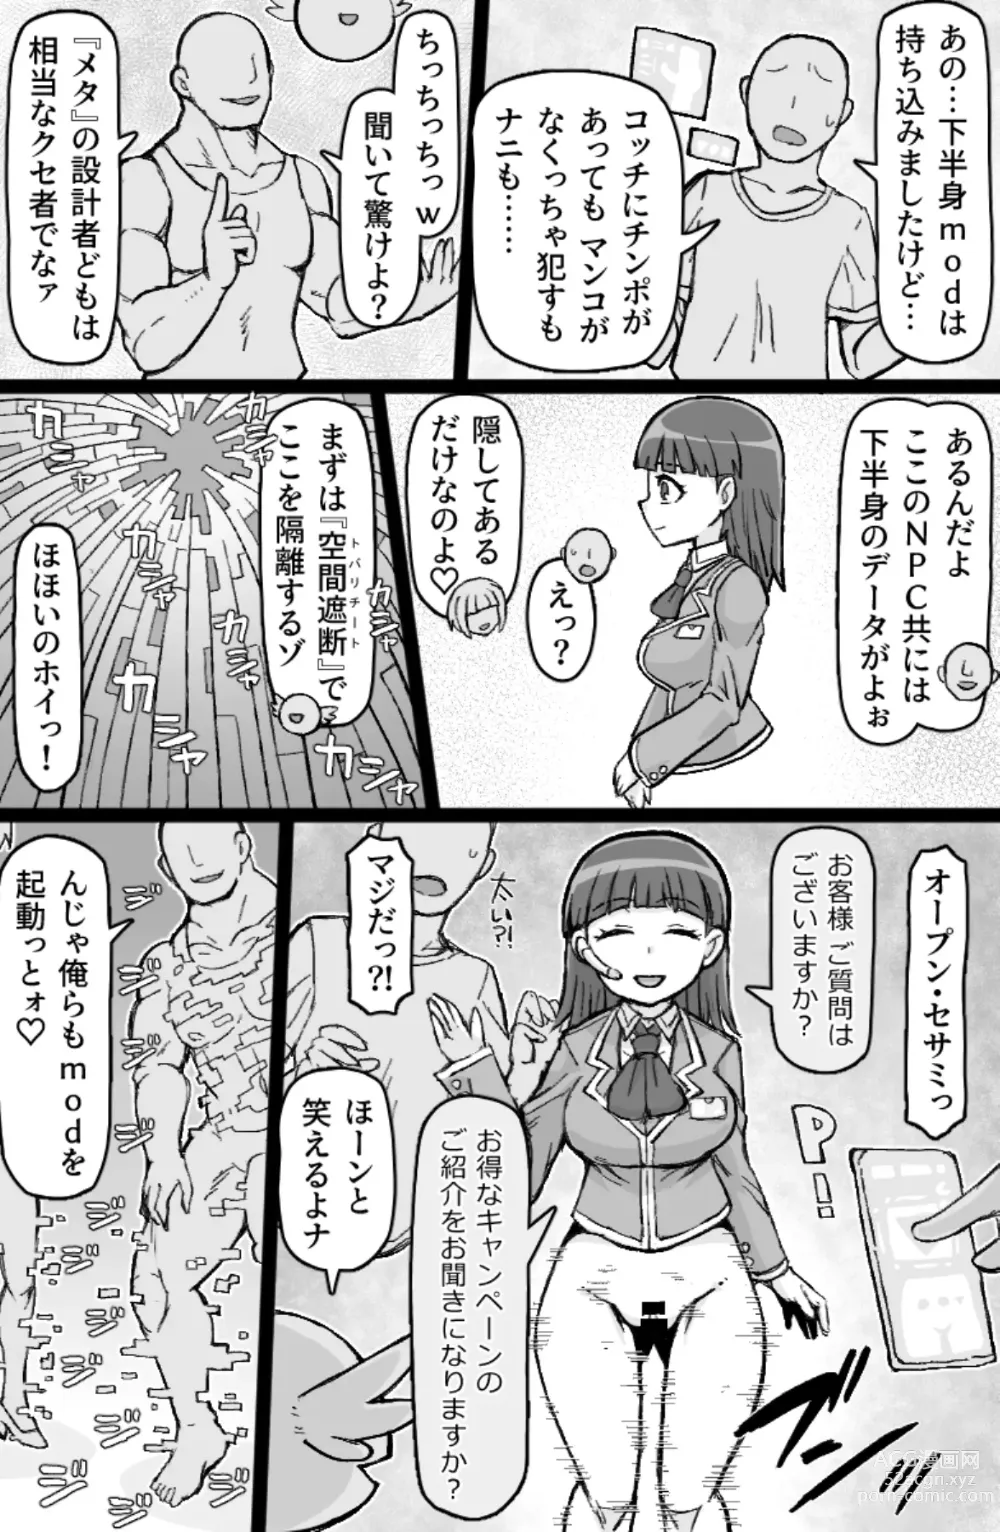 Page 5 of doujinshi Hataraku! NPCFxxk